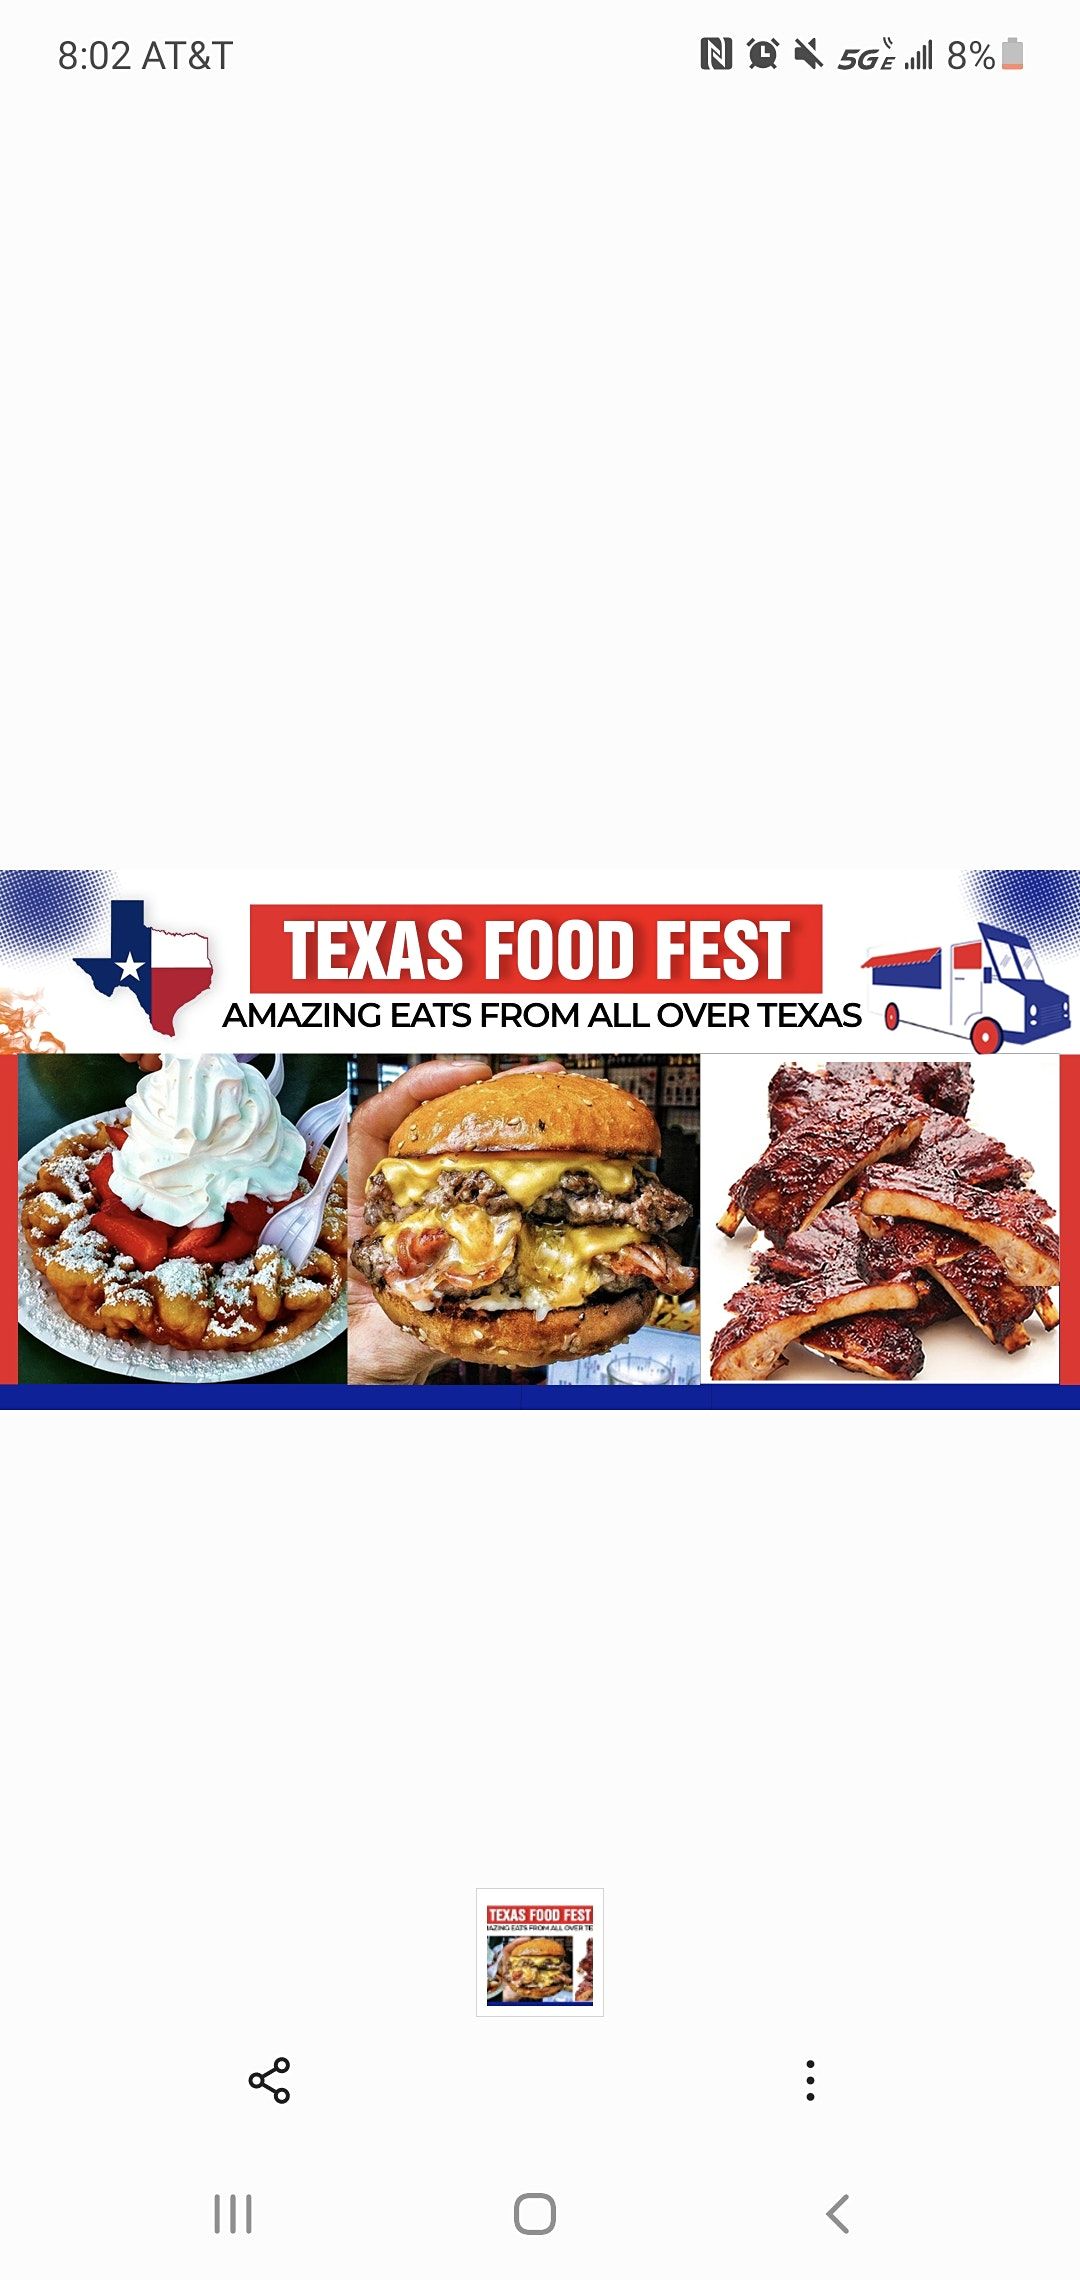 Texas Food Fest -DFW